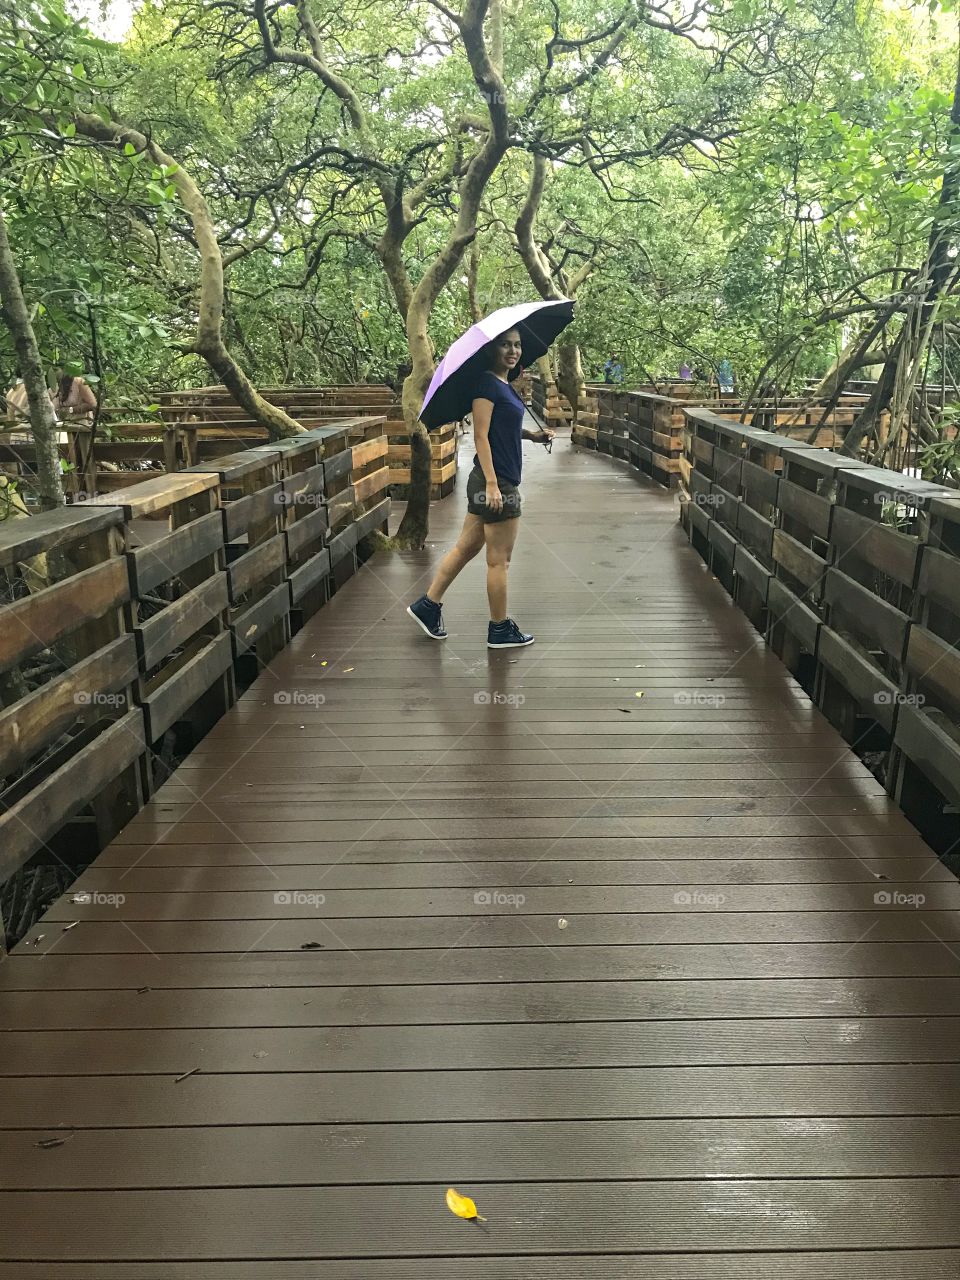 Walking in the mangroves..